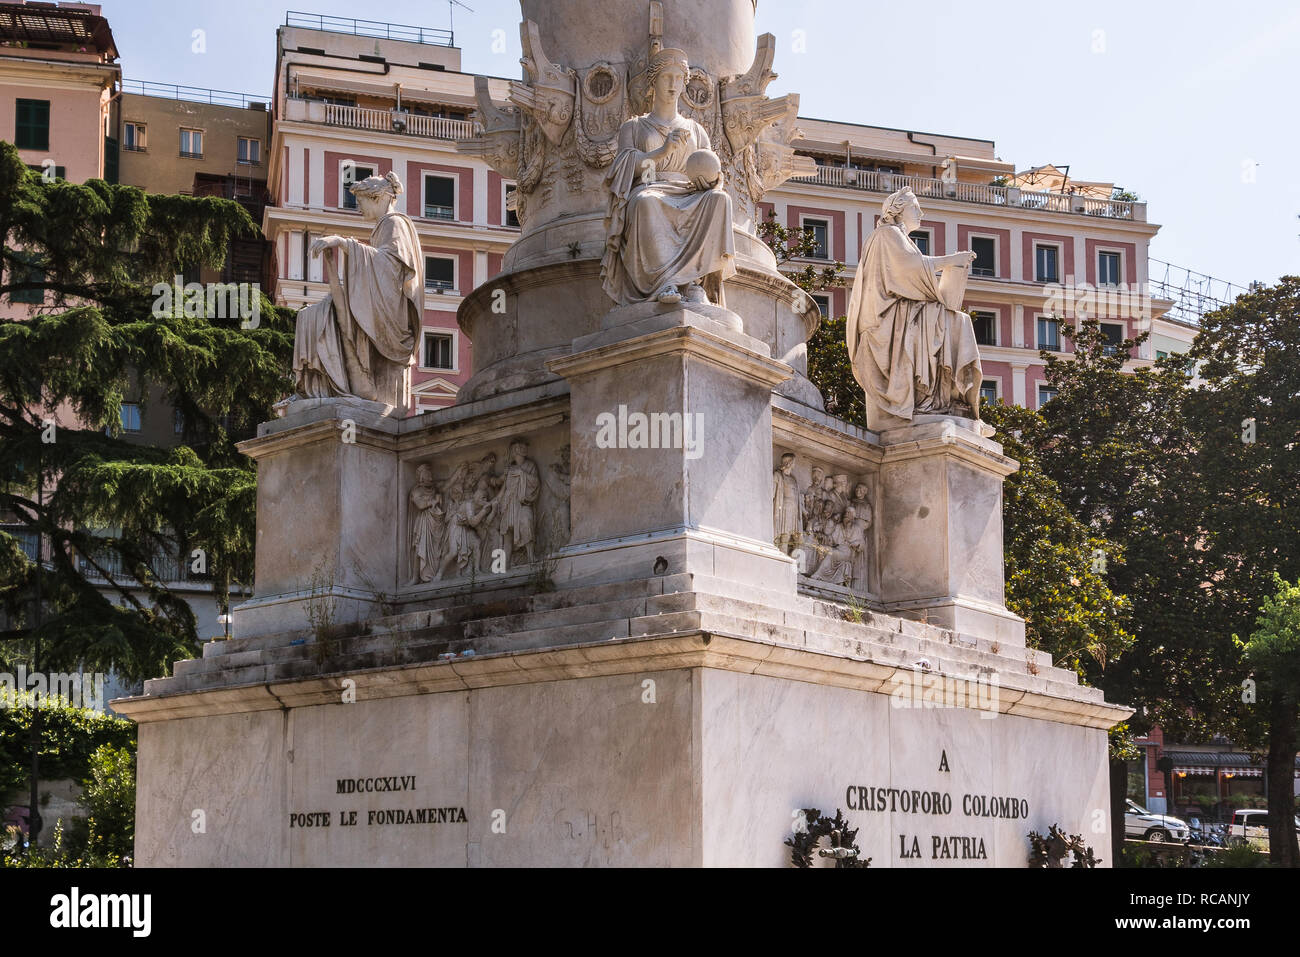 Christopher Columbus Monument on Piazza Acquaverde - details of Cristoforo Colombo in Genoa, Genova, Italy, Europe Stock Photo